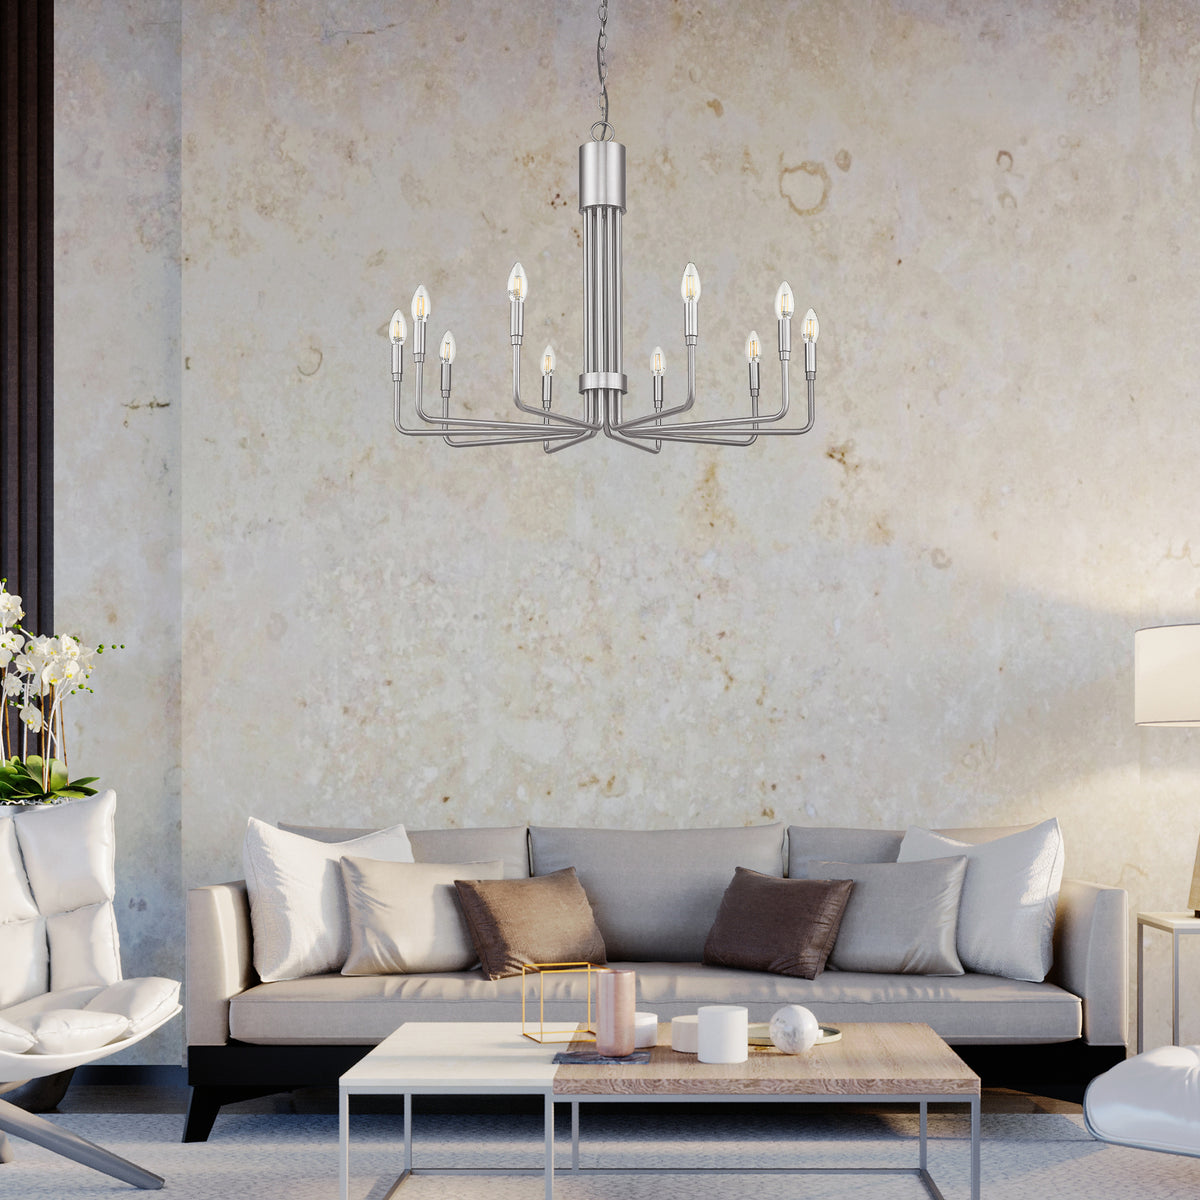 modern chandelier brushed nickel 6 light in living room